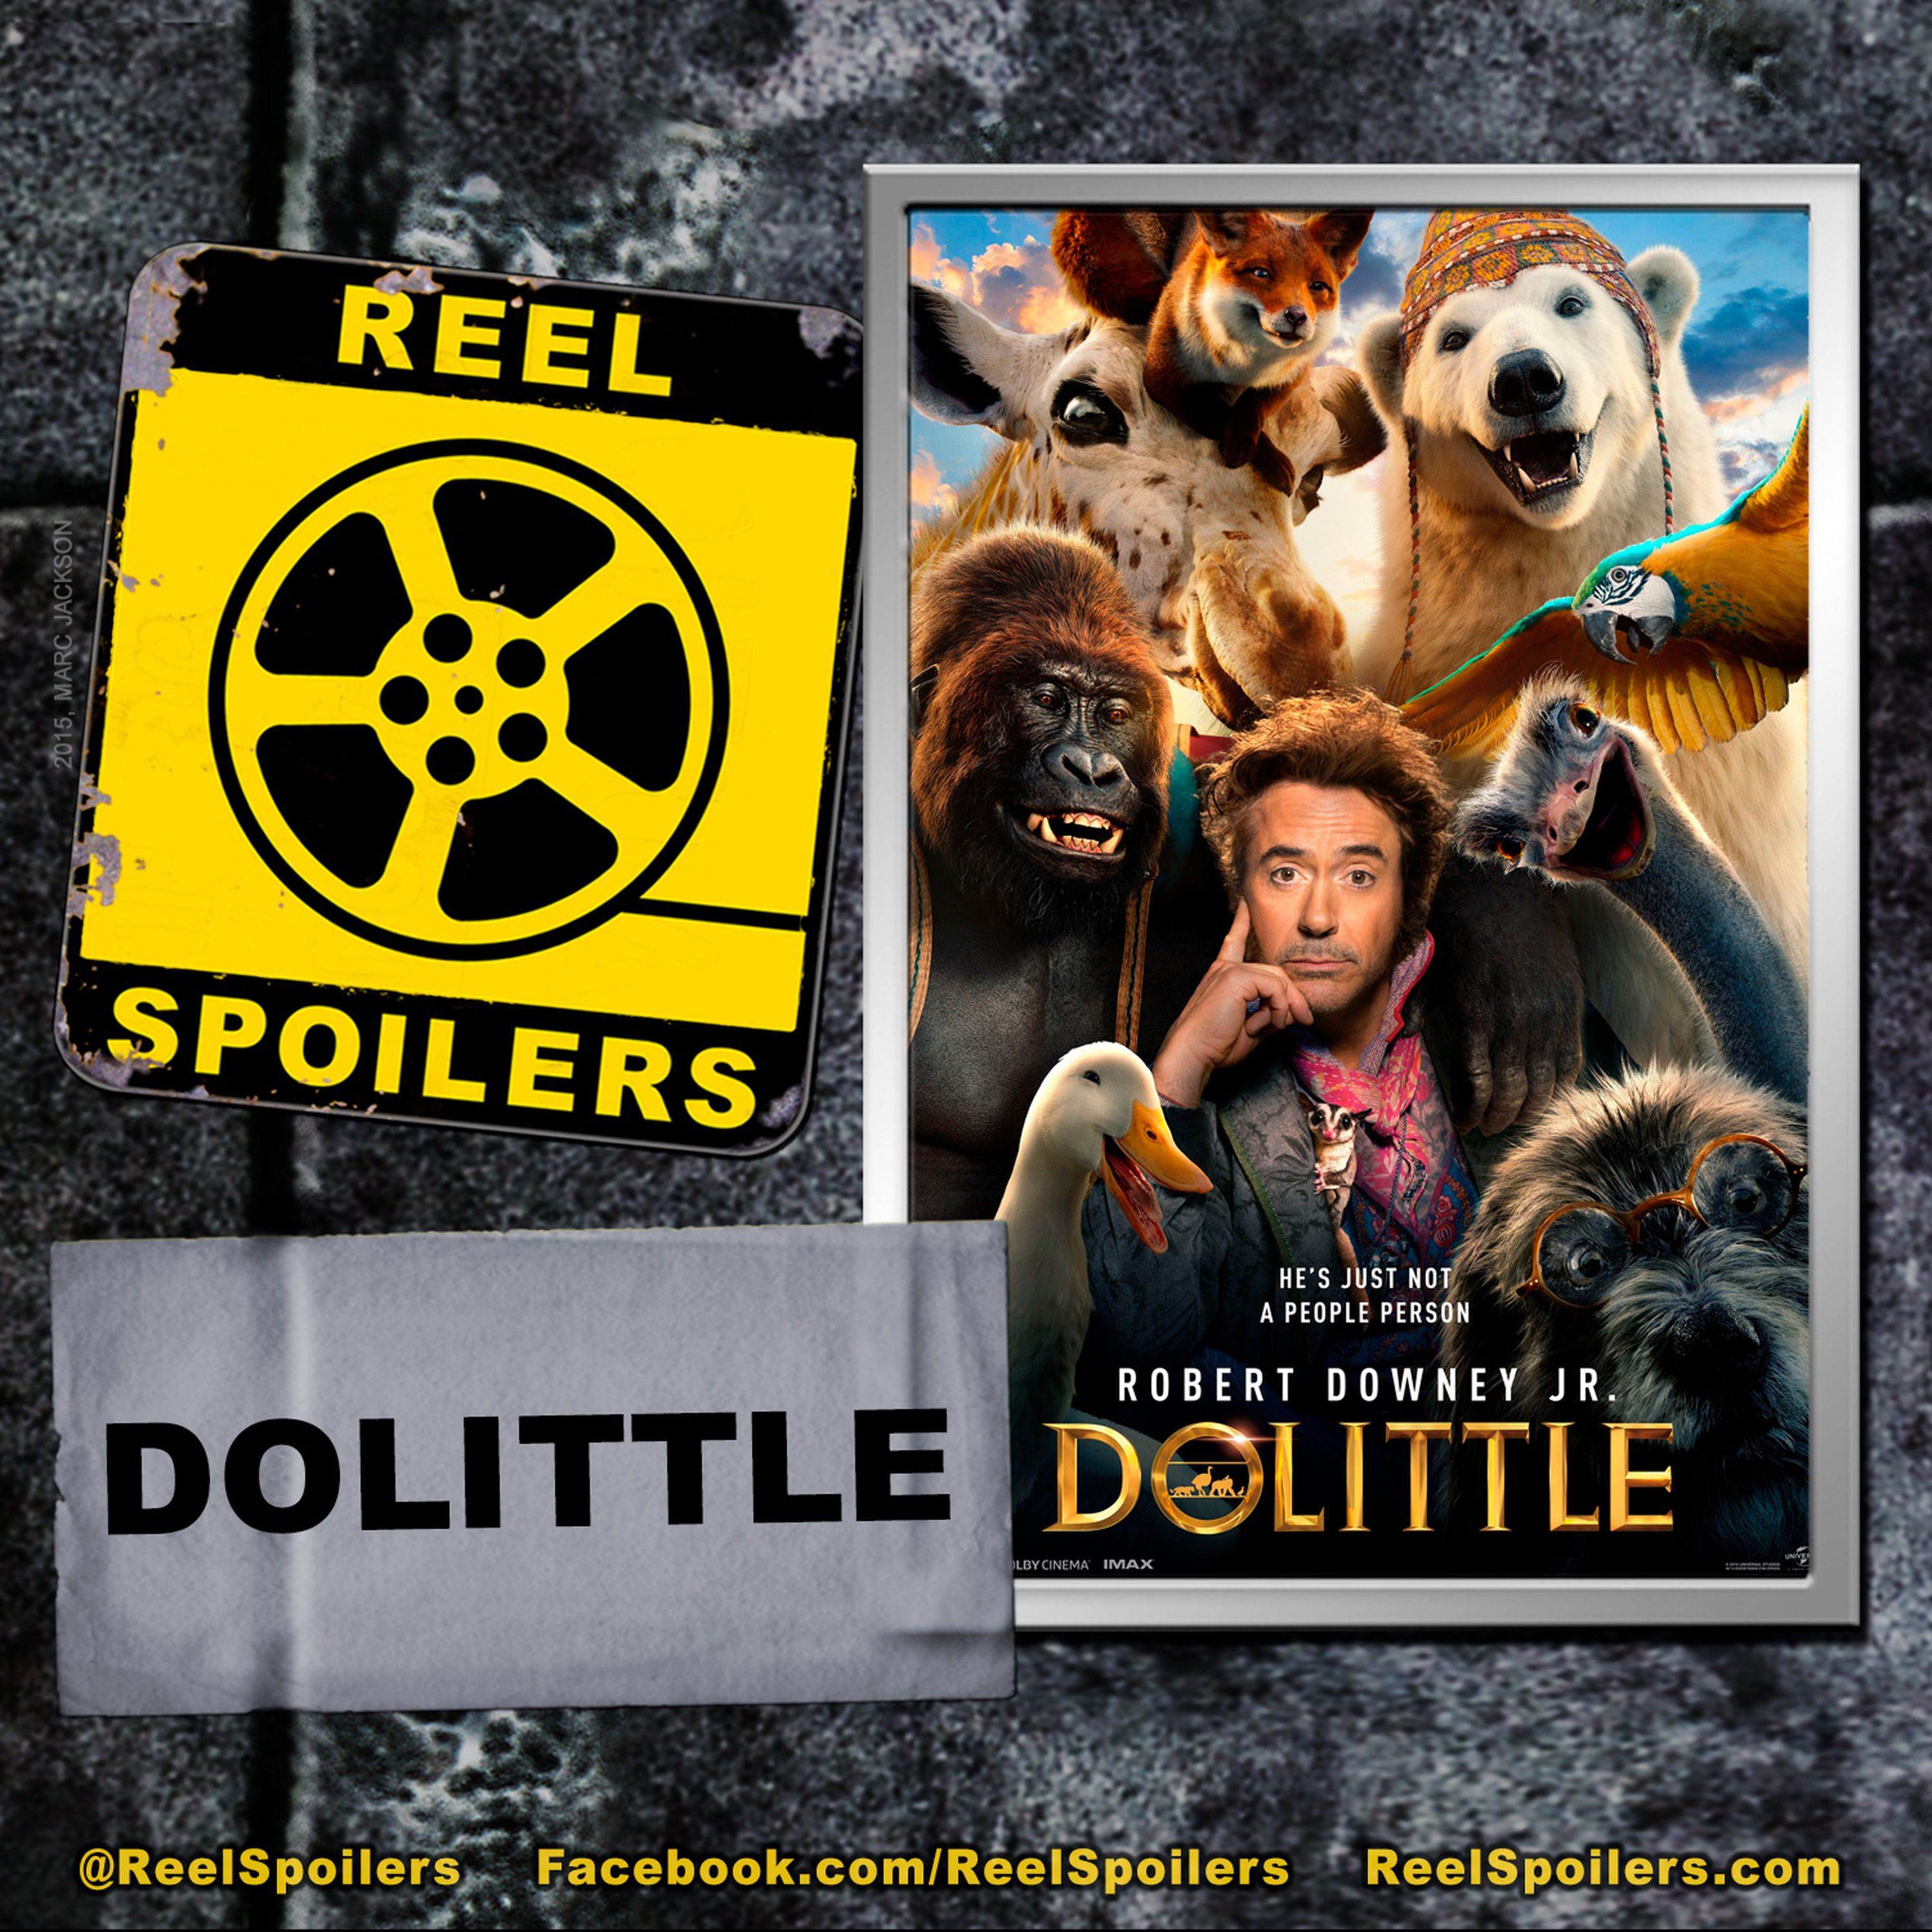 DOLITTLE Starring Robert Downey Jr., Emma Thompson, Antonio Banderas Image